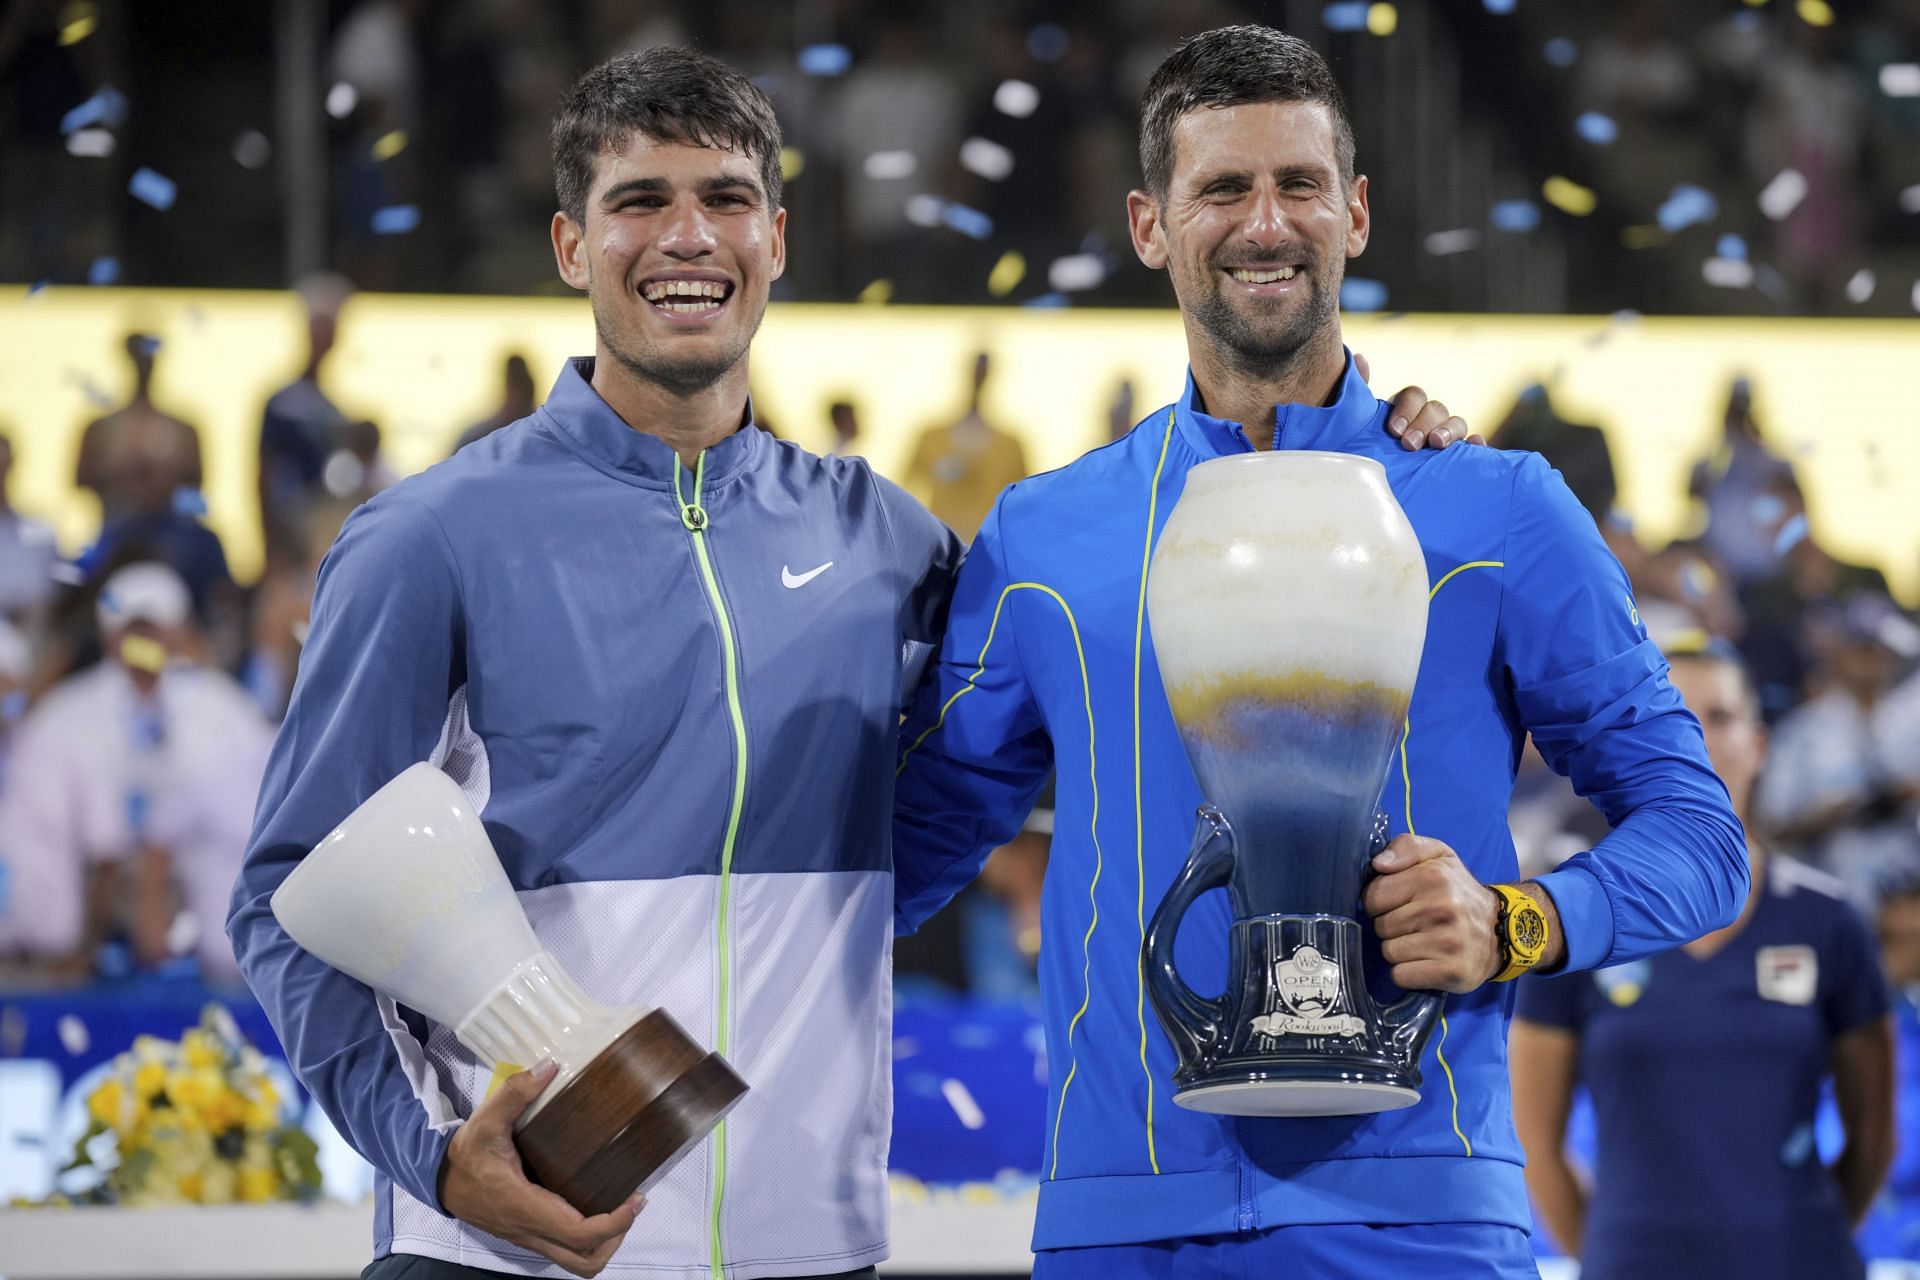 Carlos Alcaraz and Novak Djokovic with their Cincinnati trophies.